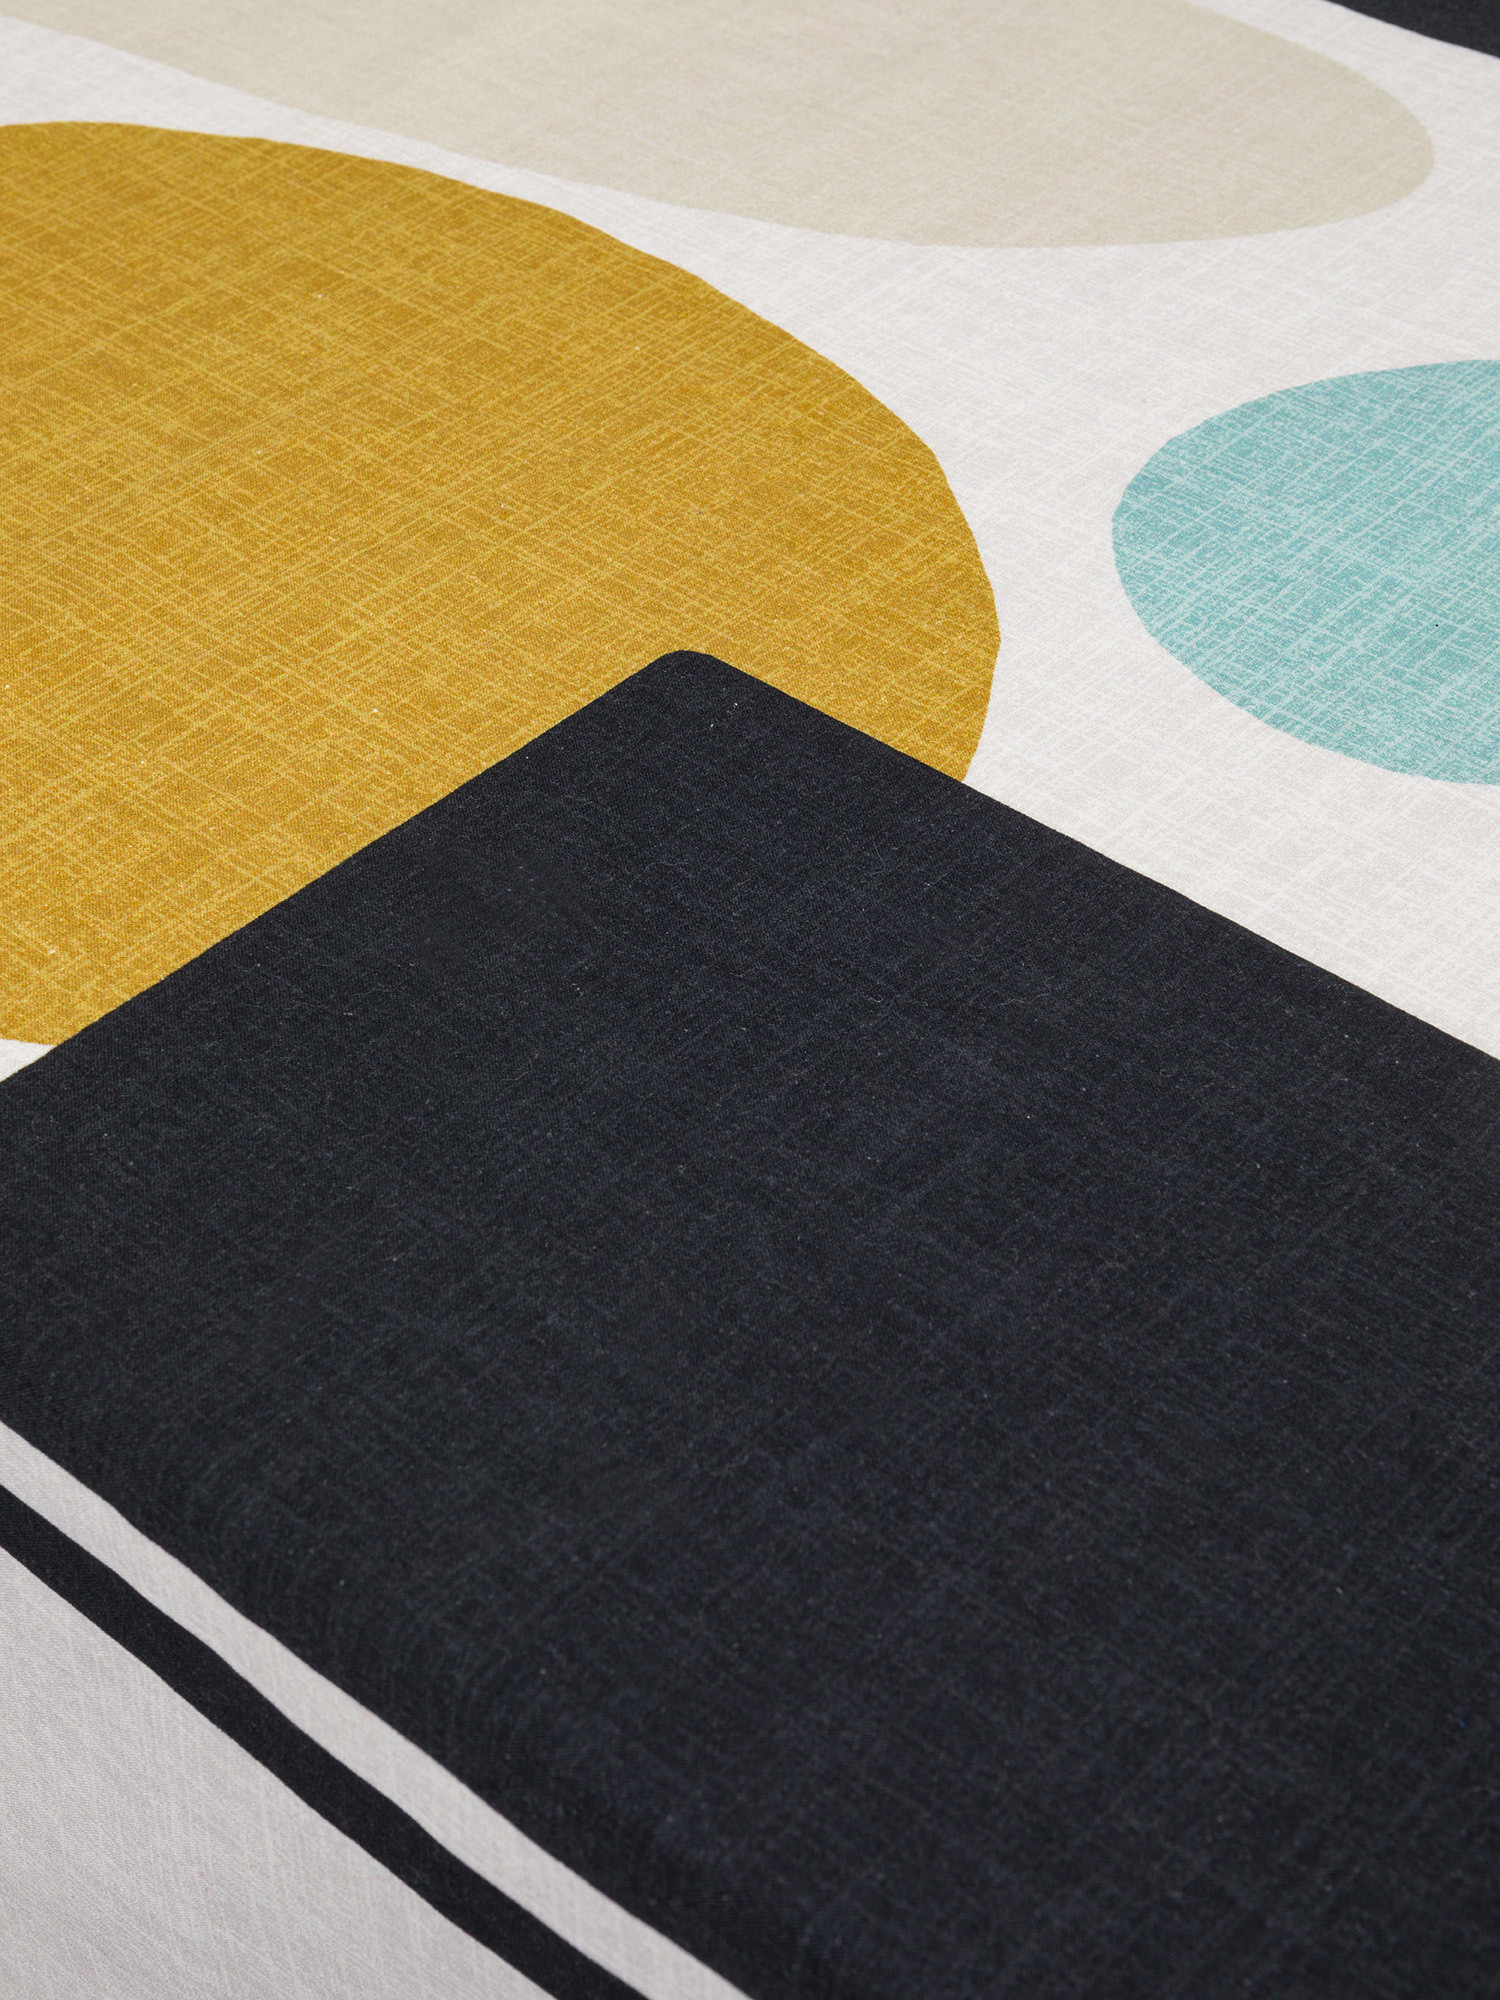 Tovaglia misto lino stampa geometrica, Multicolor, large image number 1